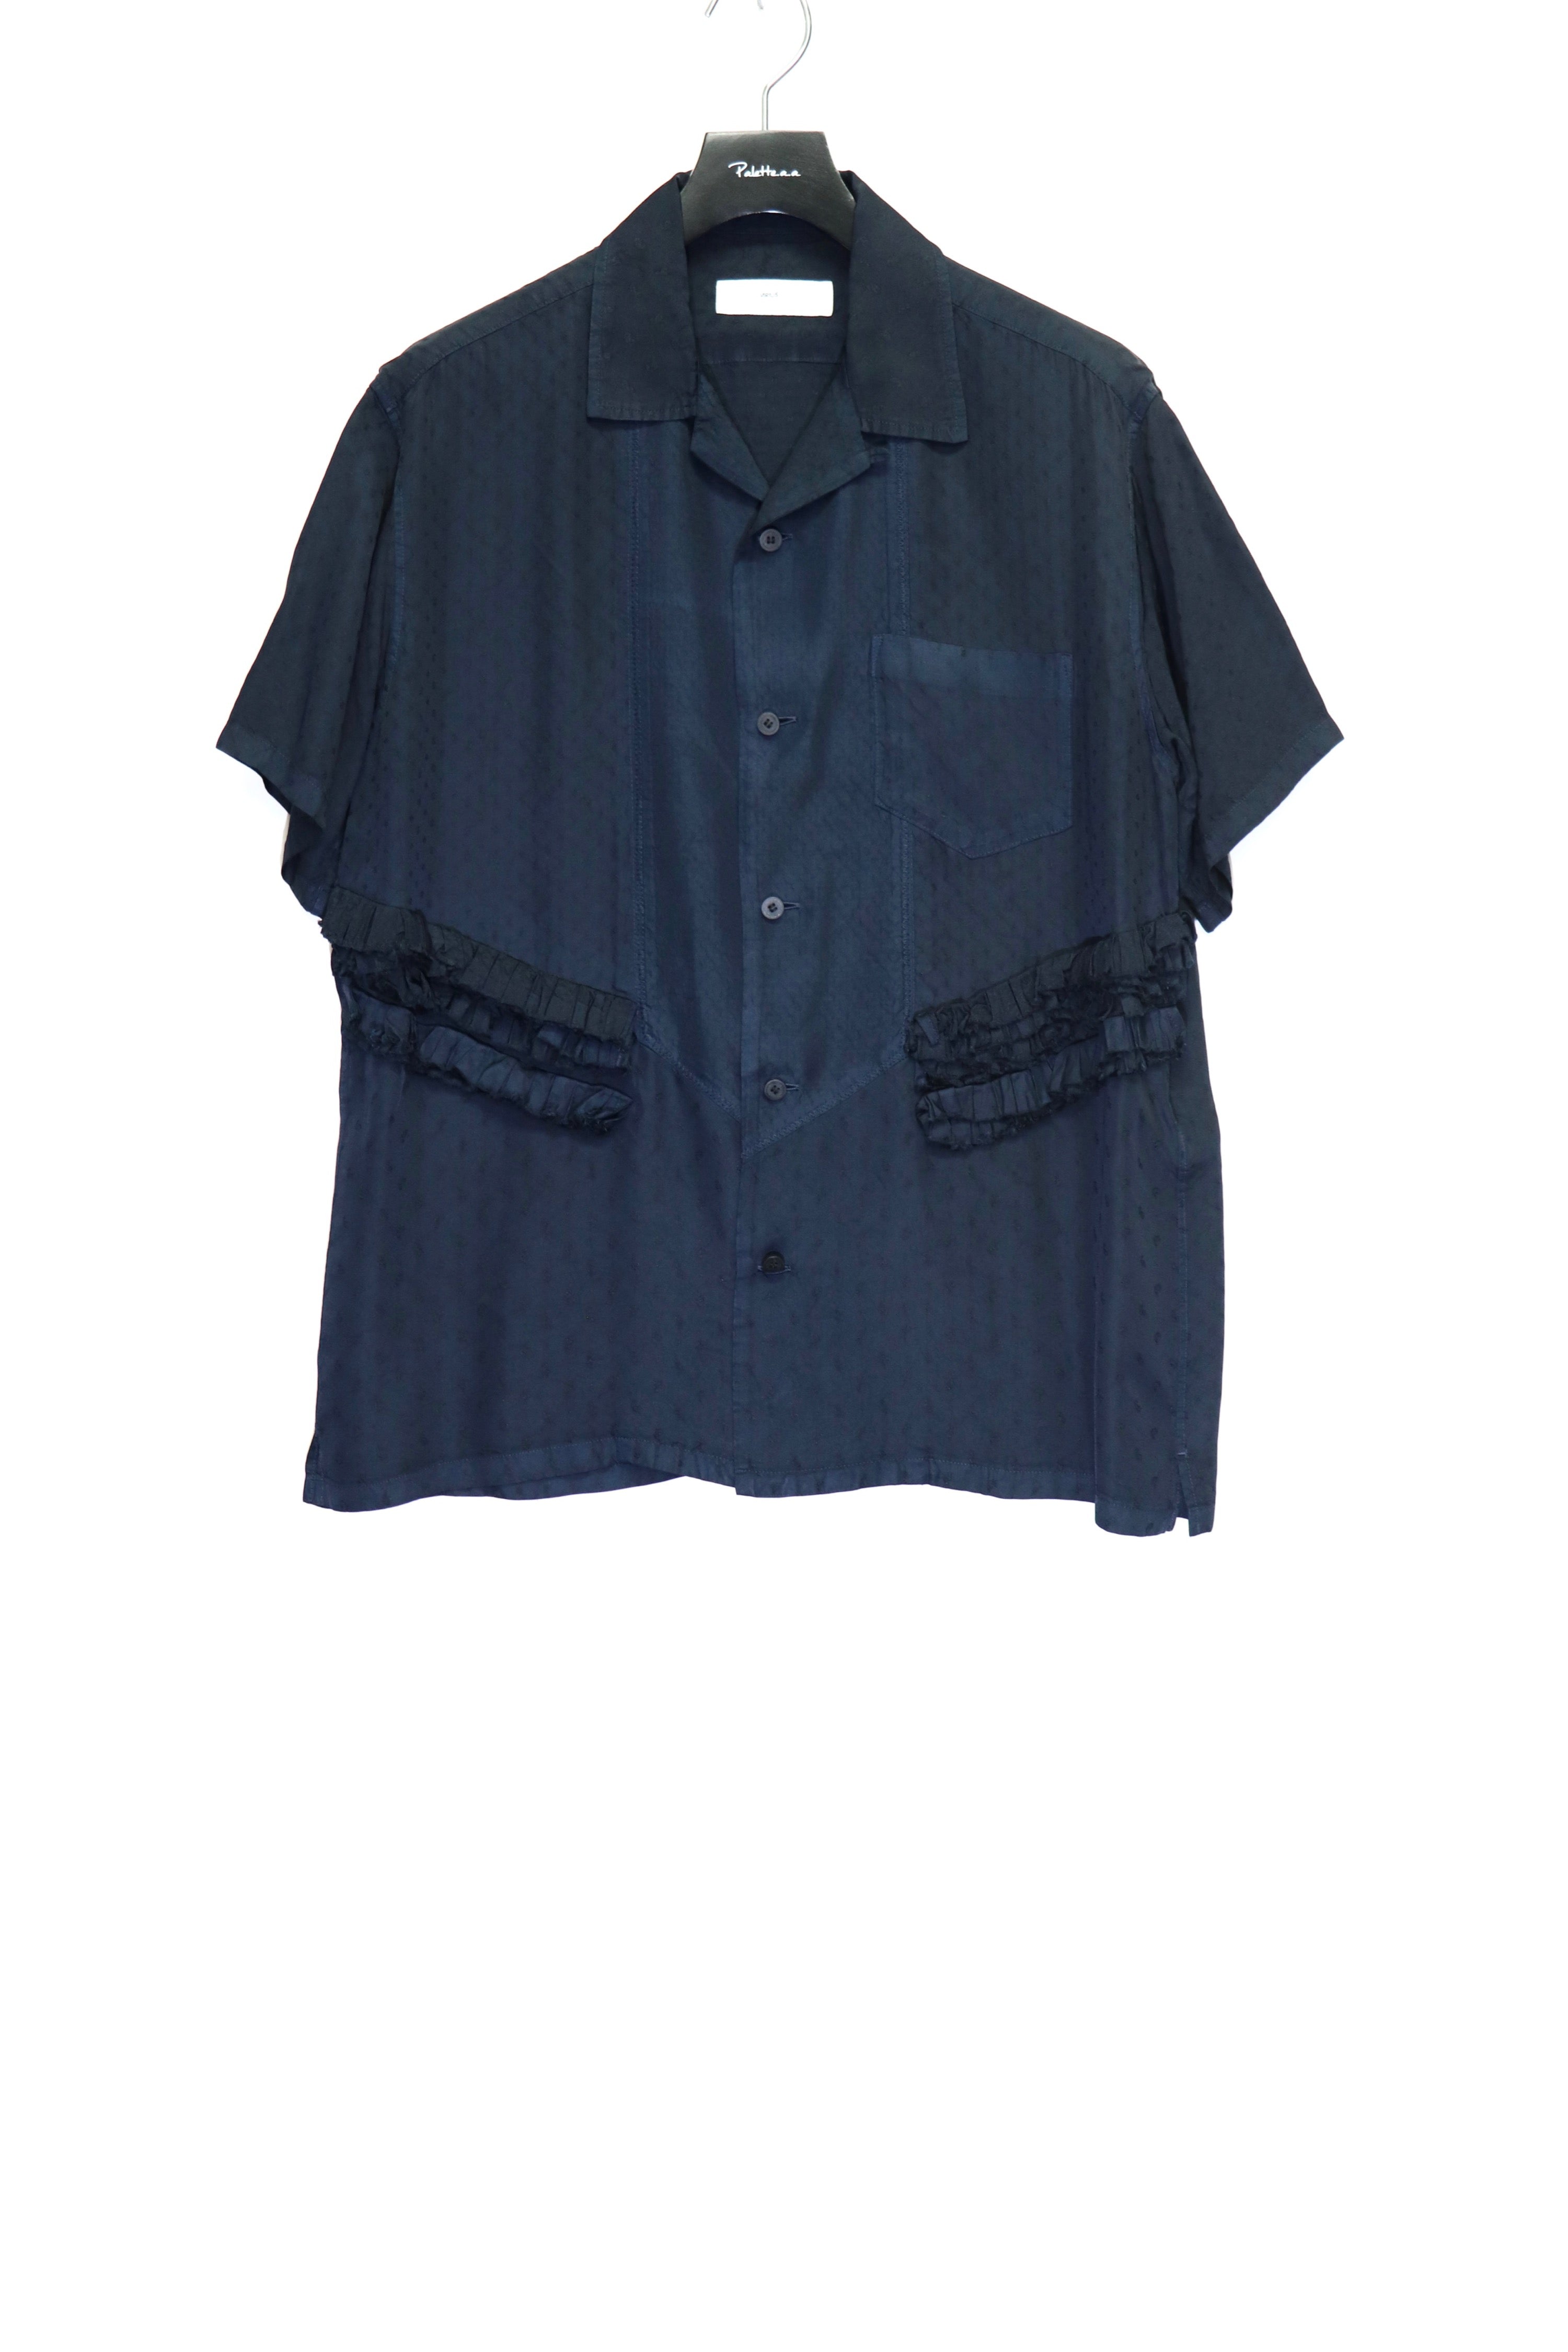 TOGA VIRILIS(トーガ ビリリース)22ssのCupra jacquard S/S shirtの ...